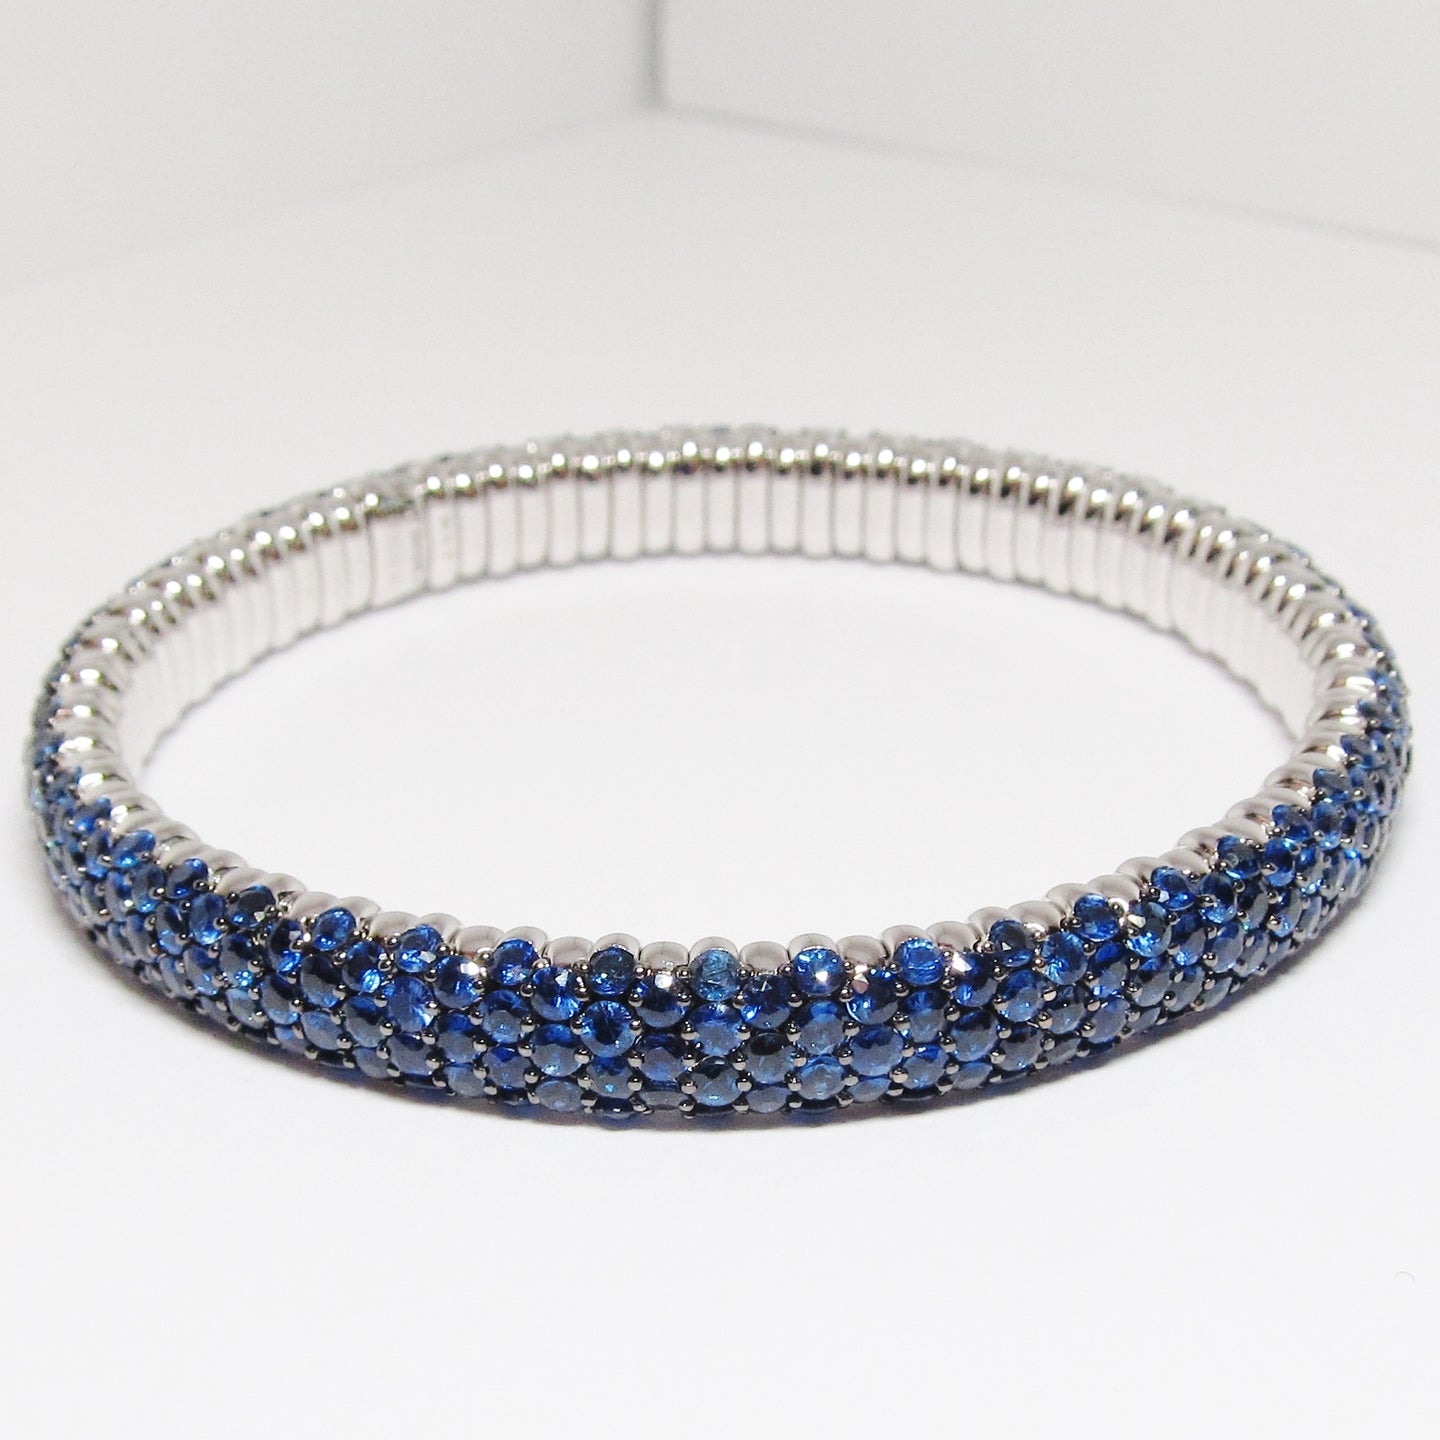 Narrow, Blue Sapphire Stretch Bangle Bracelet